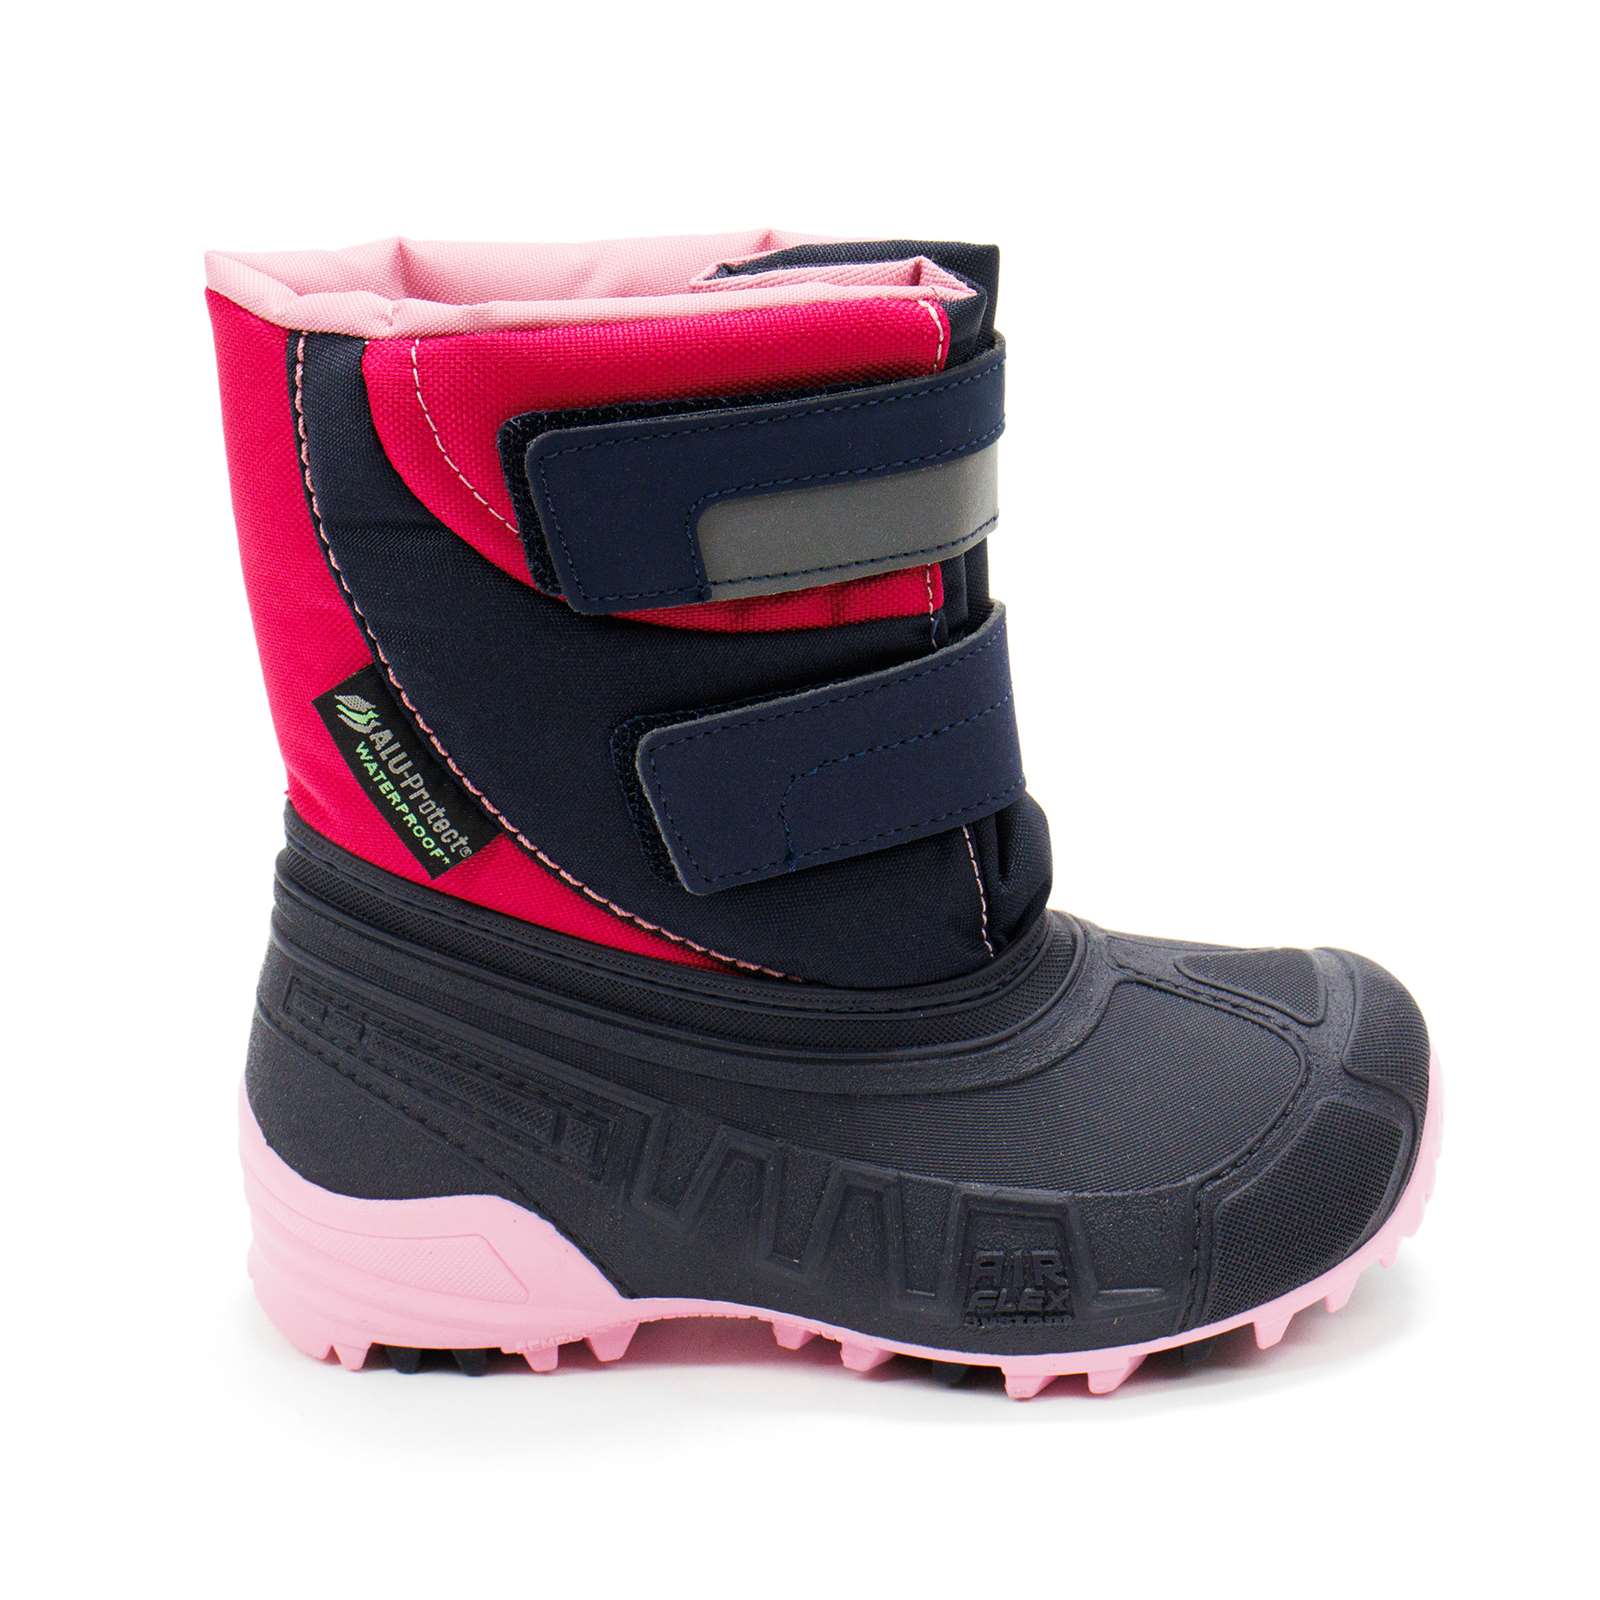 Boatilus Toddler Hybrid02 Waterproof Boots